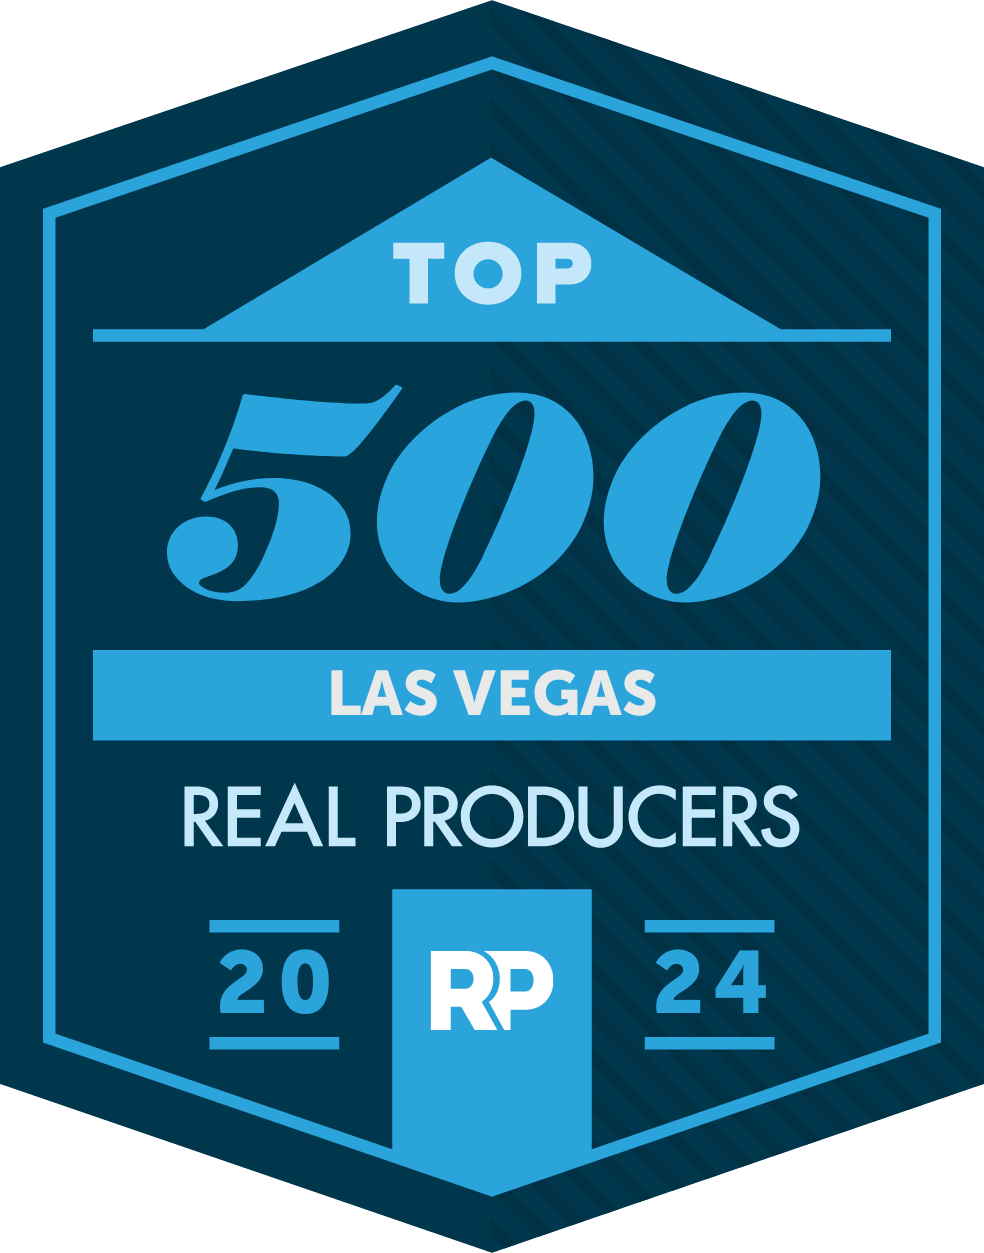 Las Vegas Real Producers TOP 500